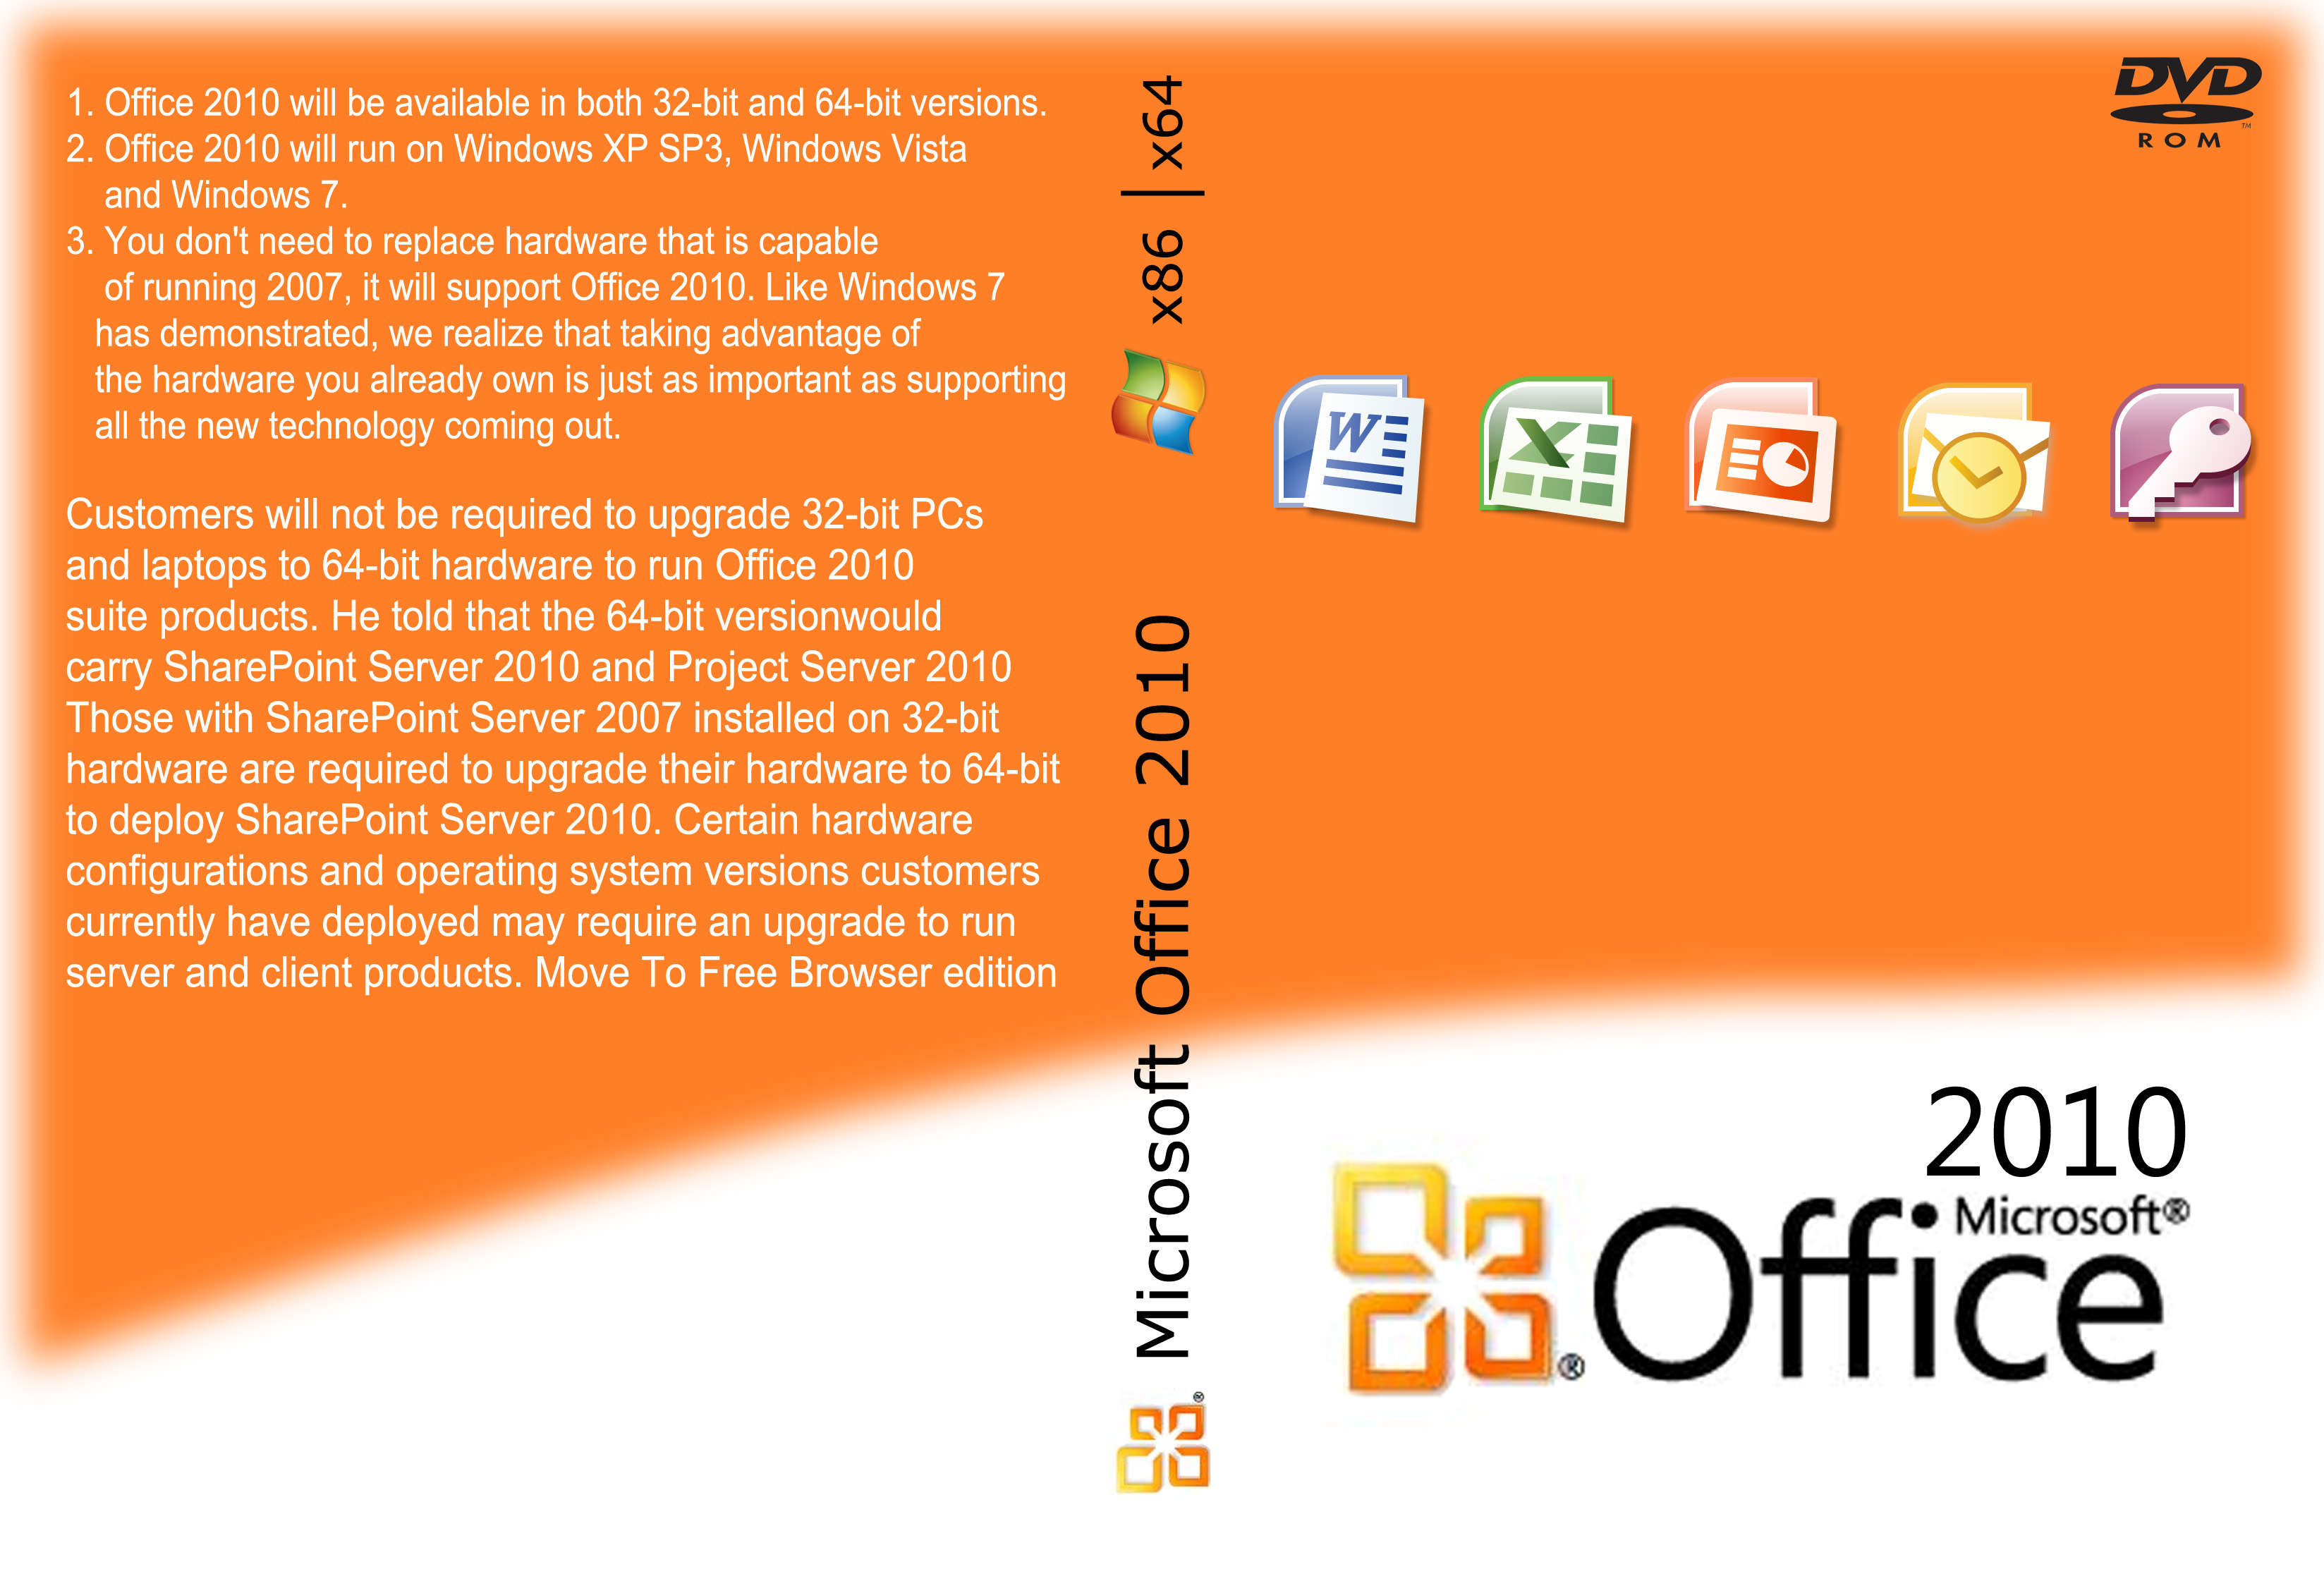 Microsoft office professional plus 2013 windows 7